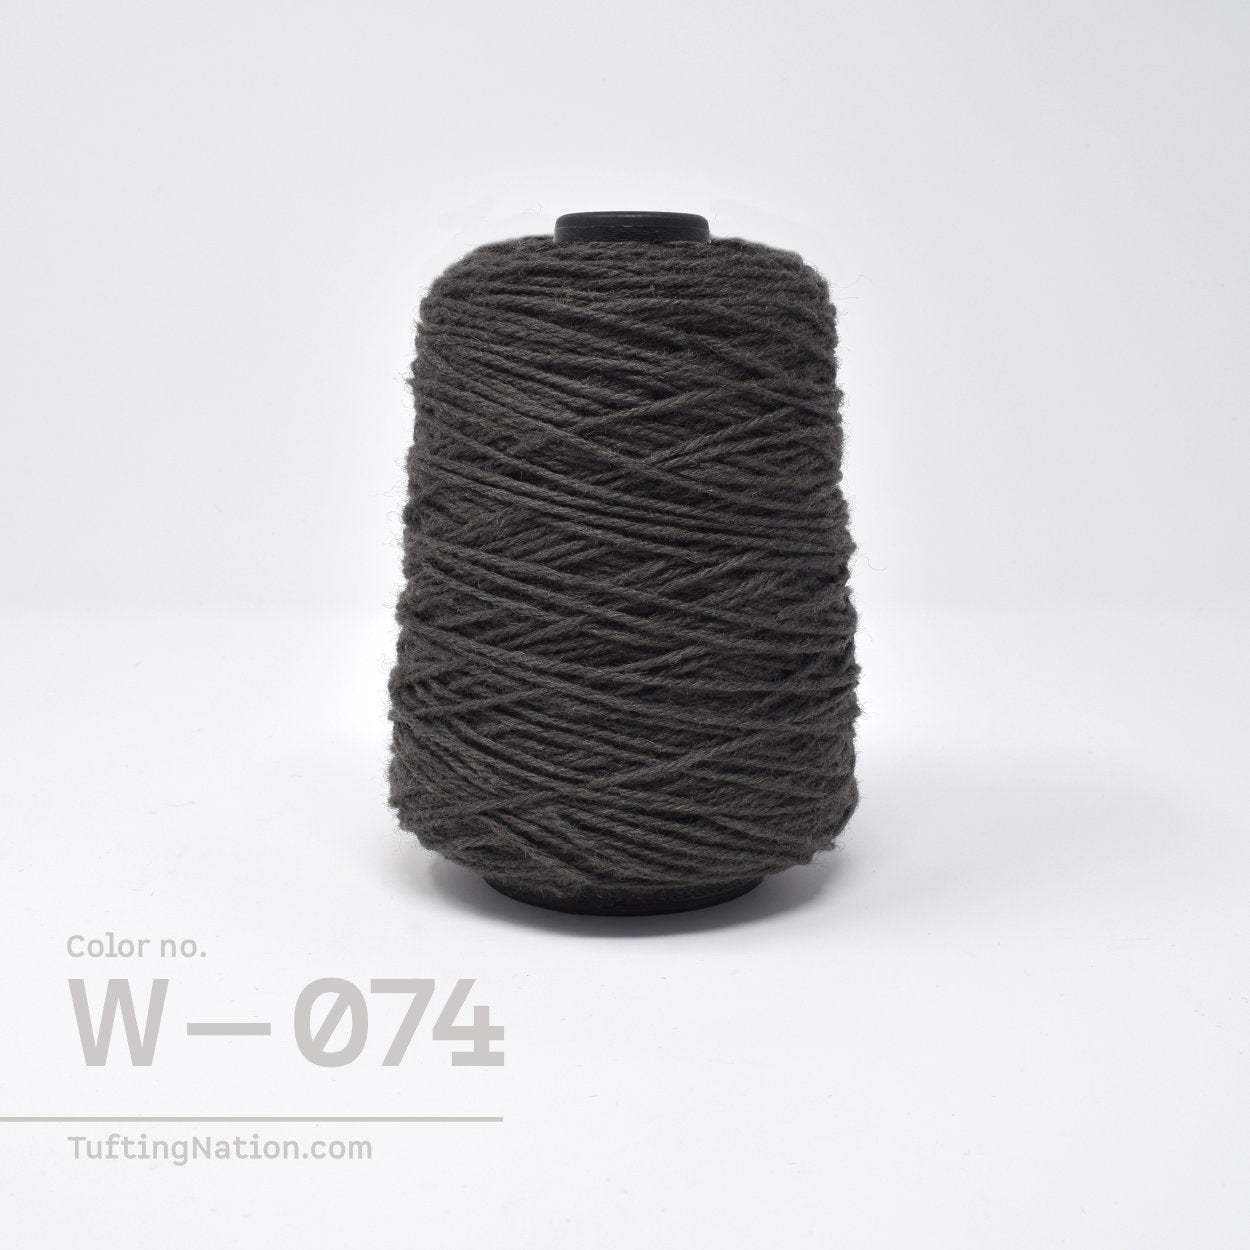 Dark Gray Wool Tufting Yarn on Cones for Rug making | TuftingNation